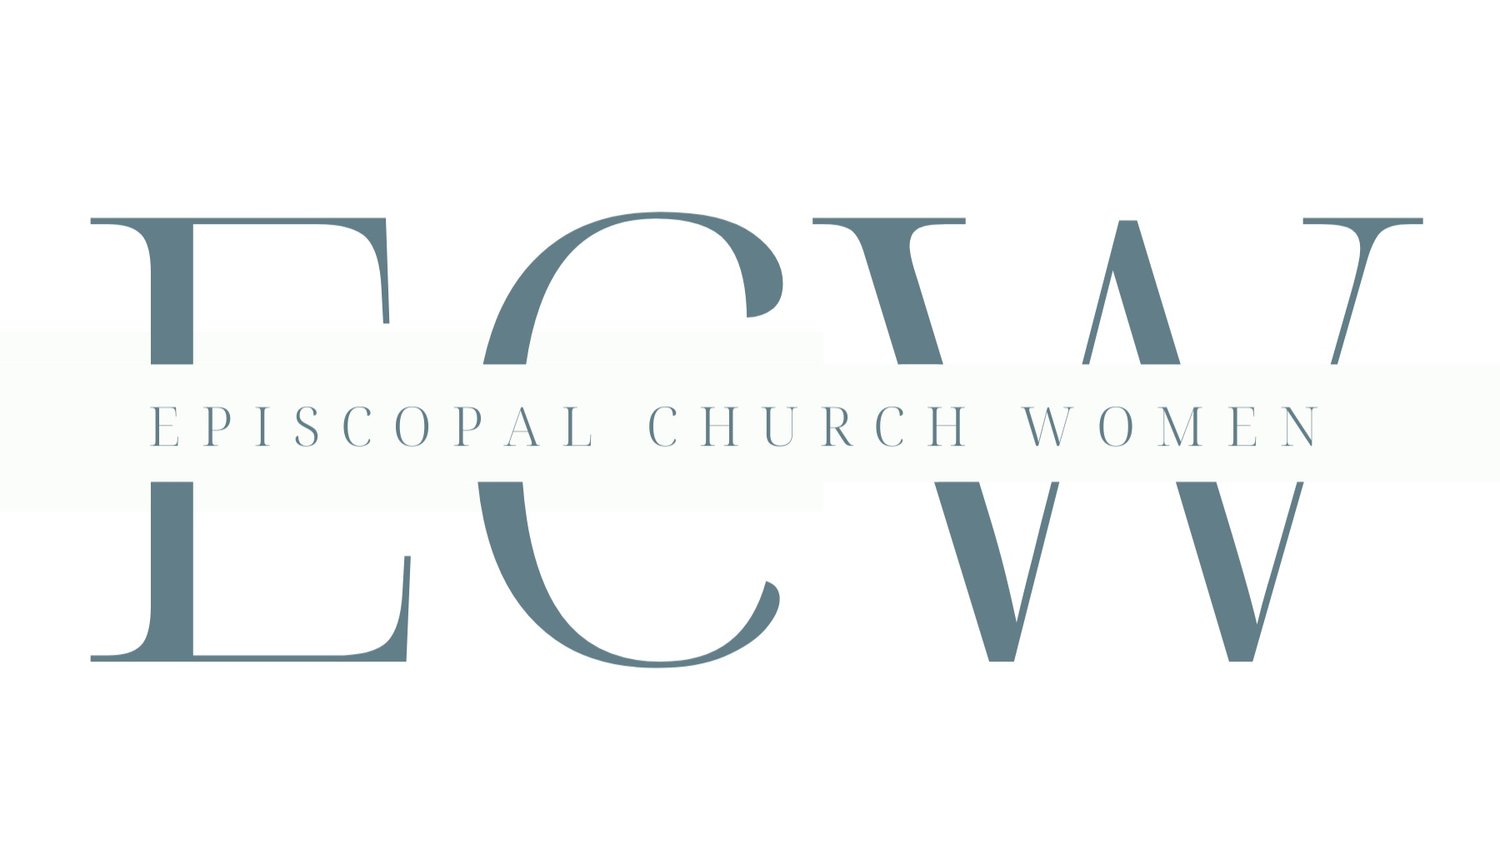 Alabama Episcopal Church Women 